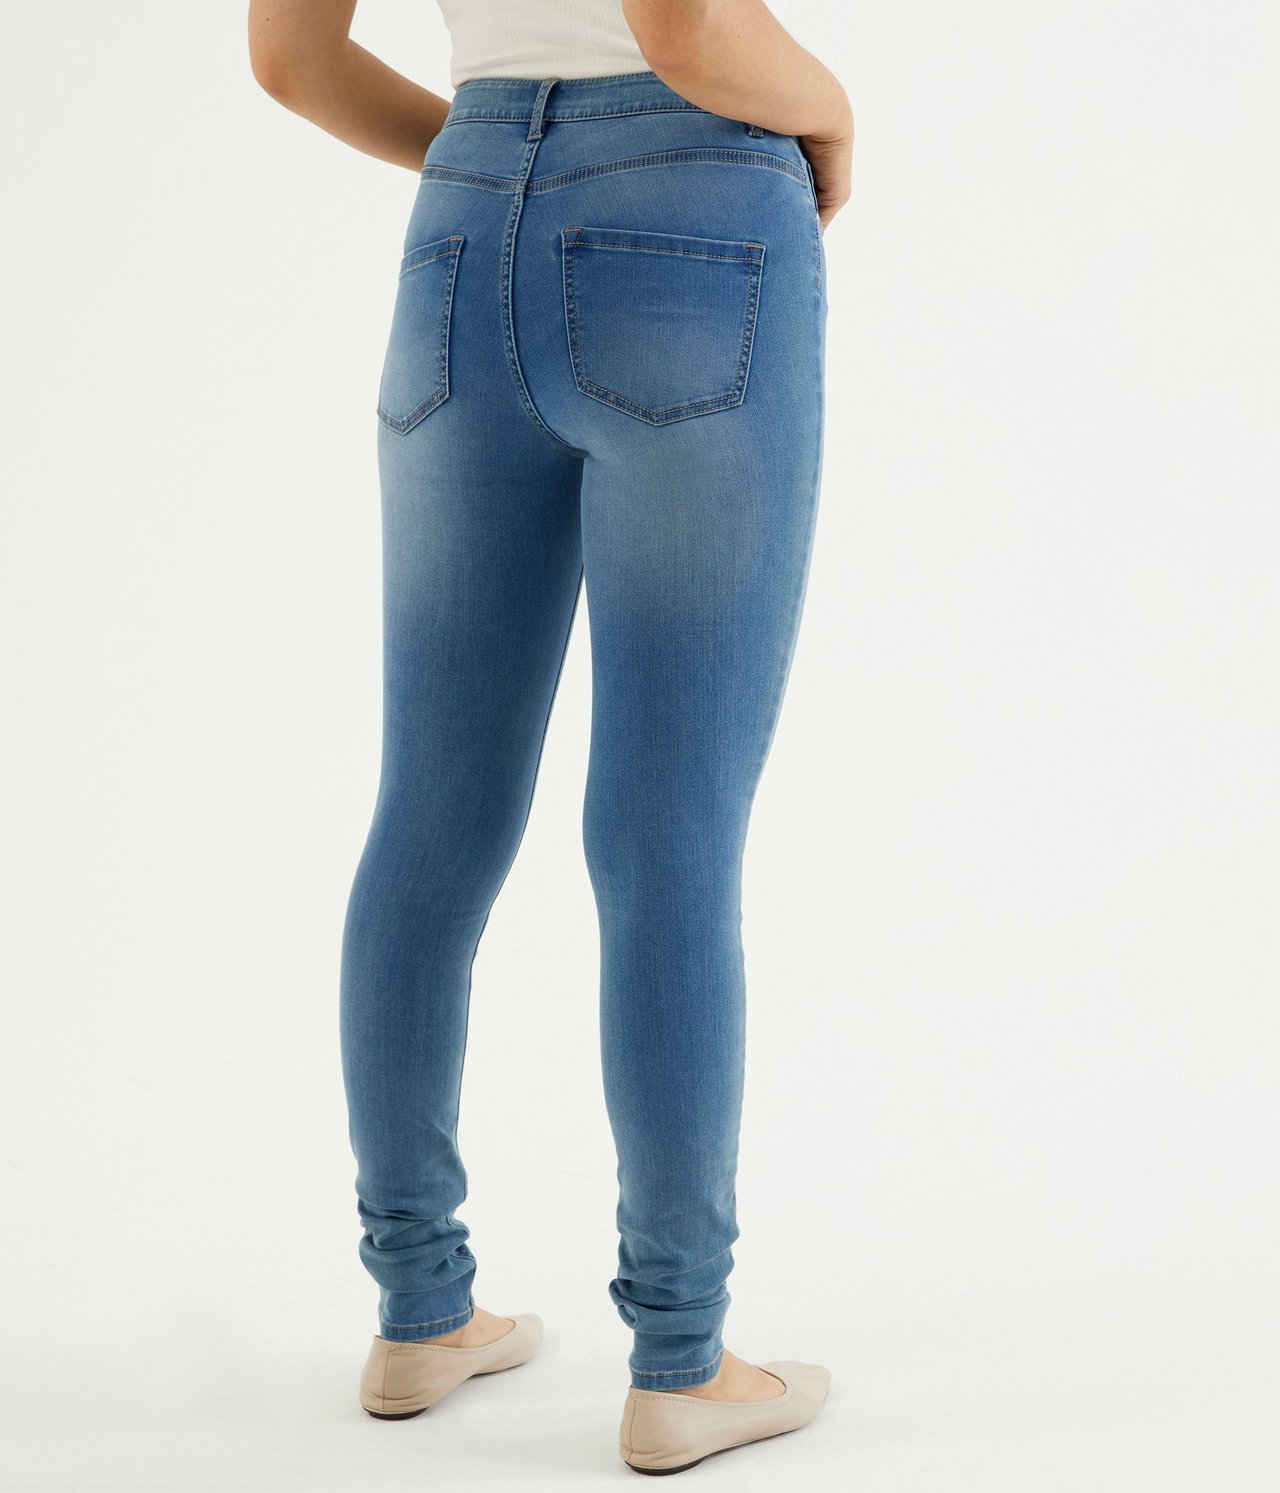 Super slim jeans extra long leg Denimi - null - 0